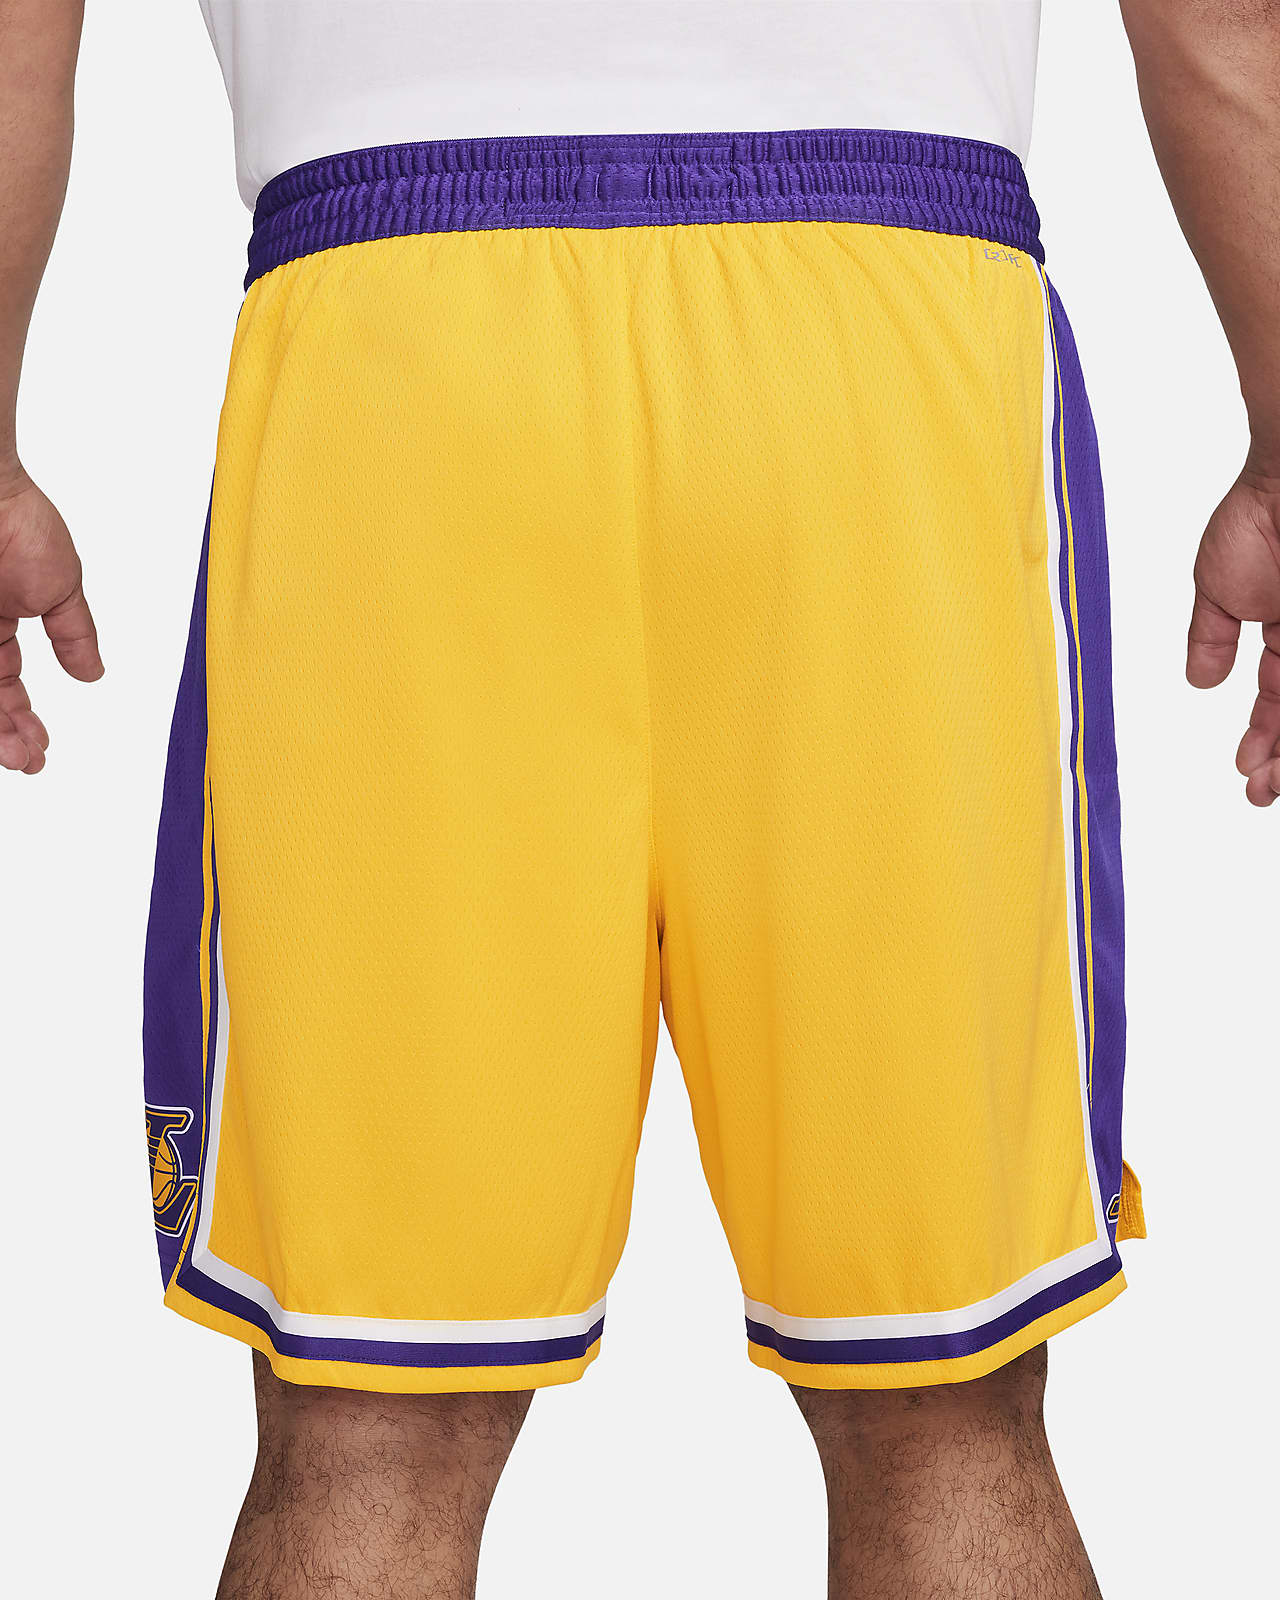 Blue Los Angeles Lakers NBA Pants for sale